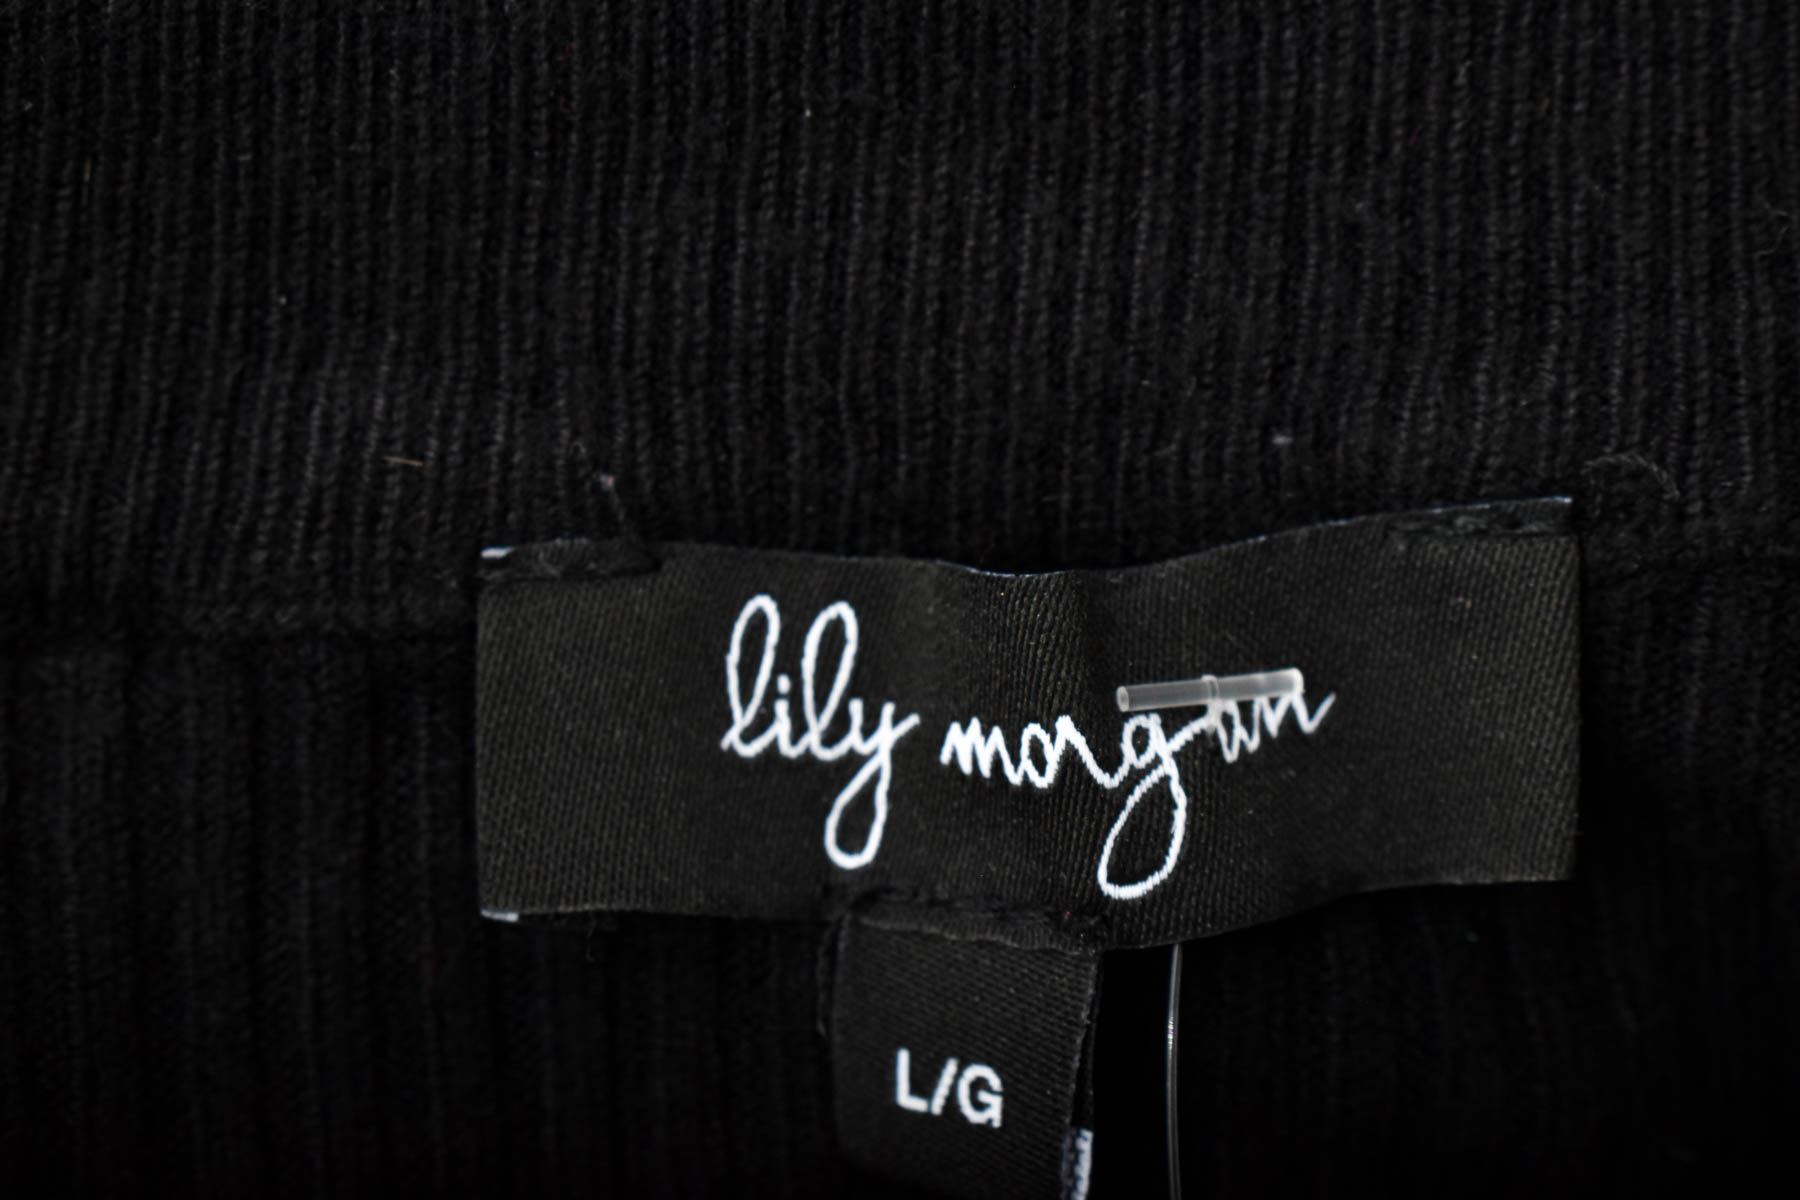 Sweter damski - Lily Morgan - 2